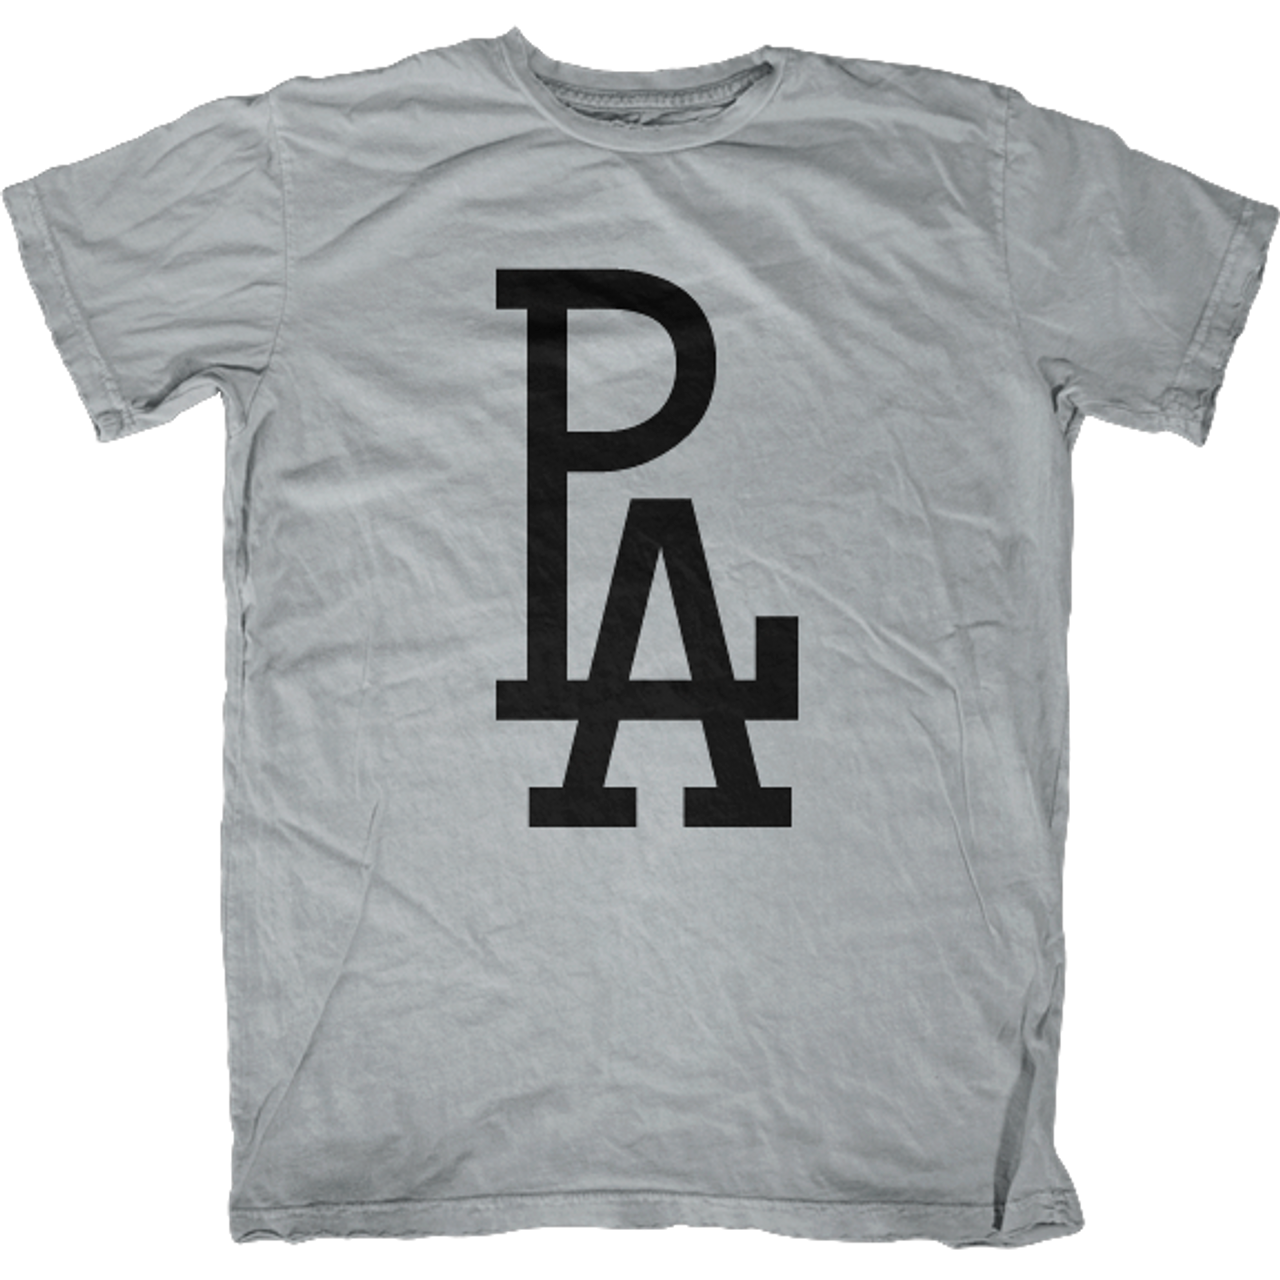 We Run LA Dodgers Women's Premium T-Shirt – Larry Brown Sports